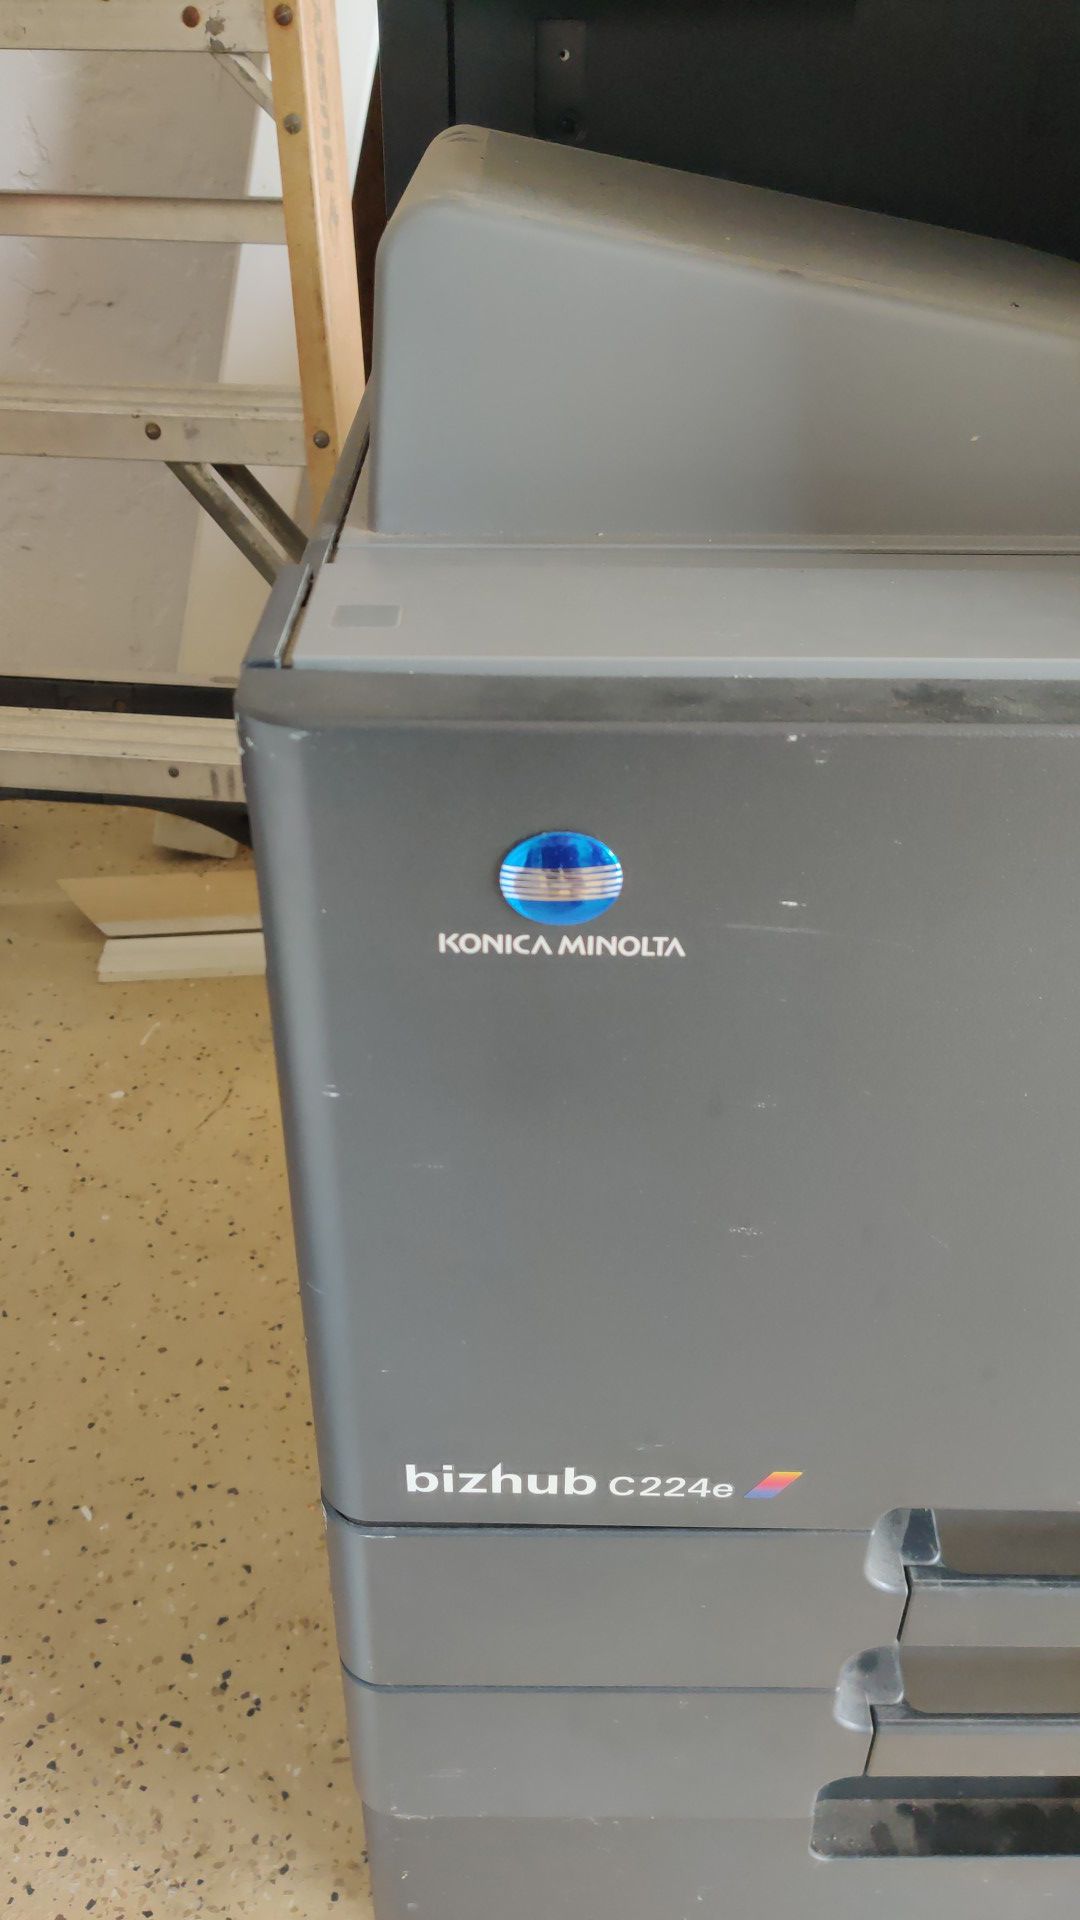 Konica Minolta printer